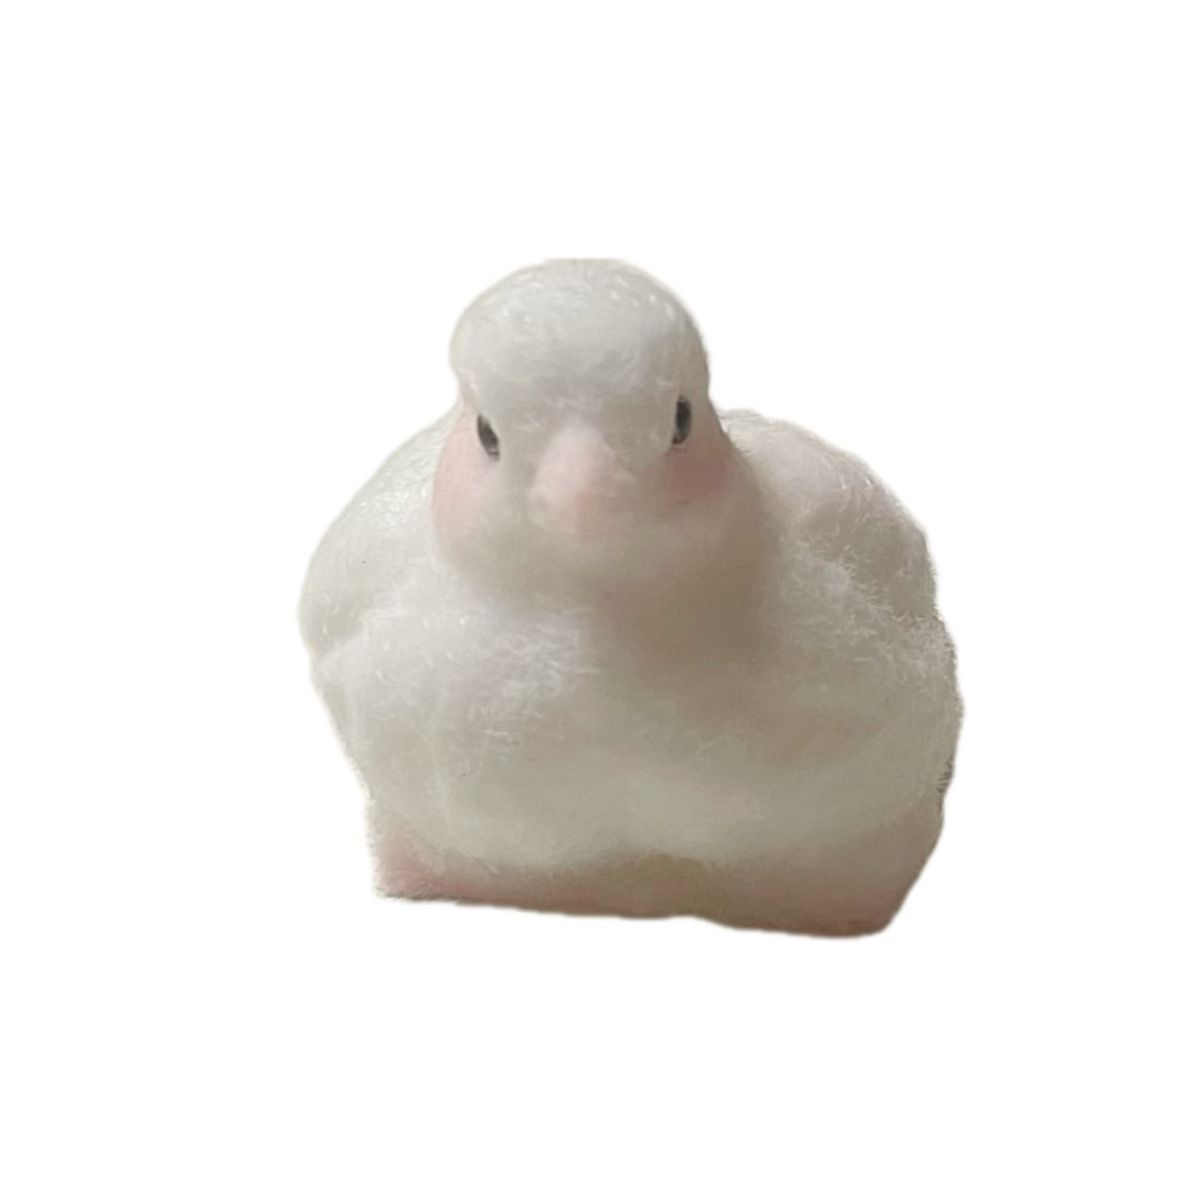 Handmade Silicone Birdie Stress Relief Toy Taba Squishy